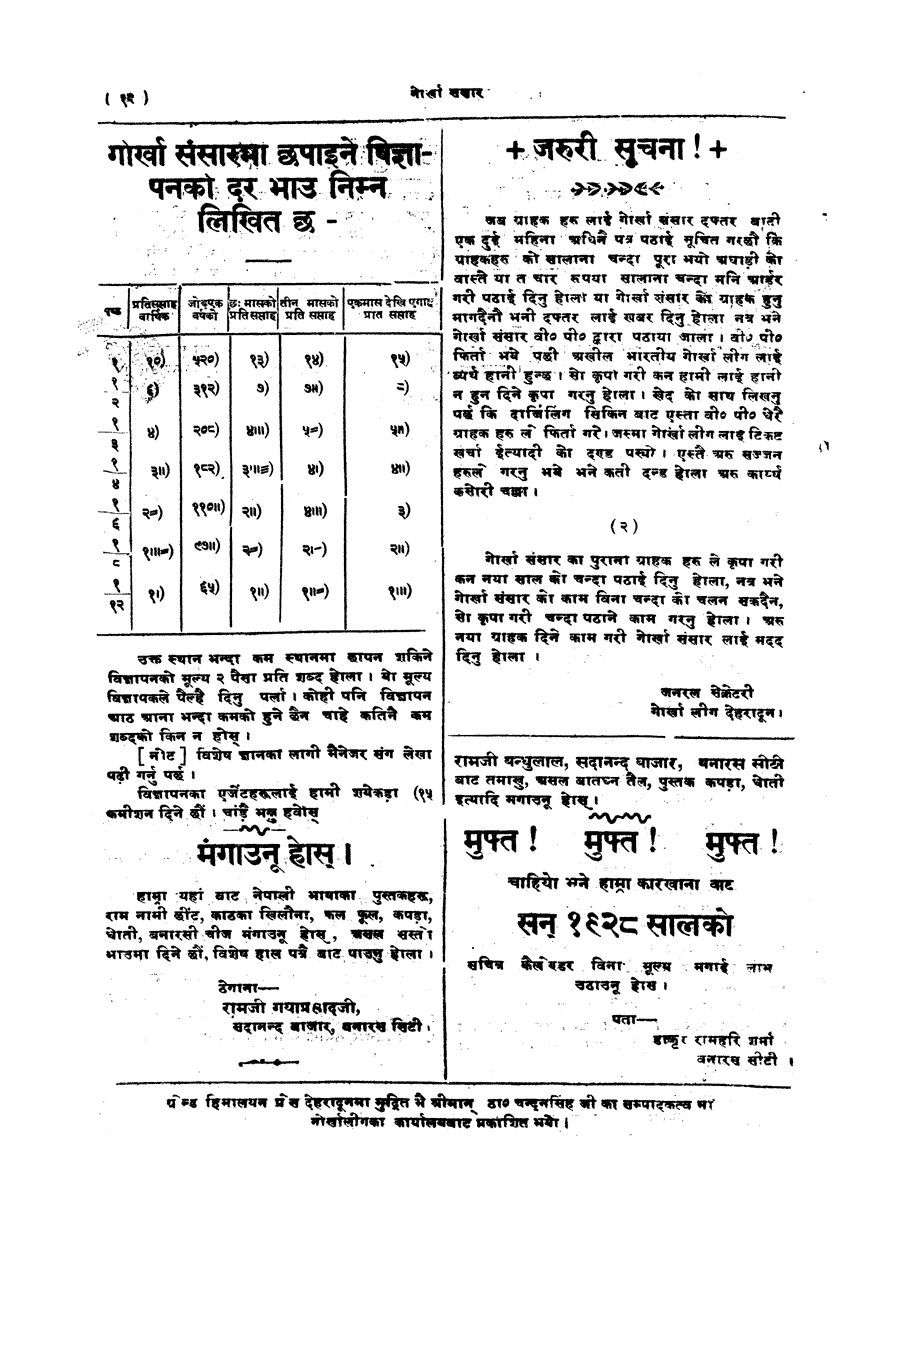 Gorkha Sansar, 15 June 1928, page 12